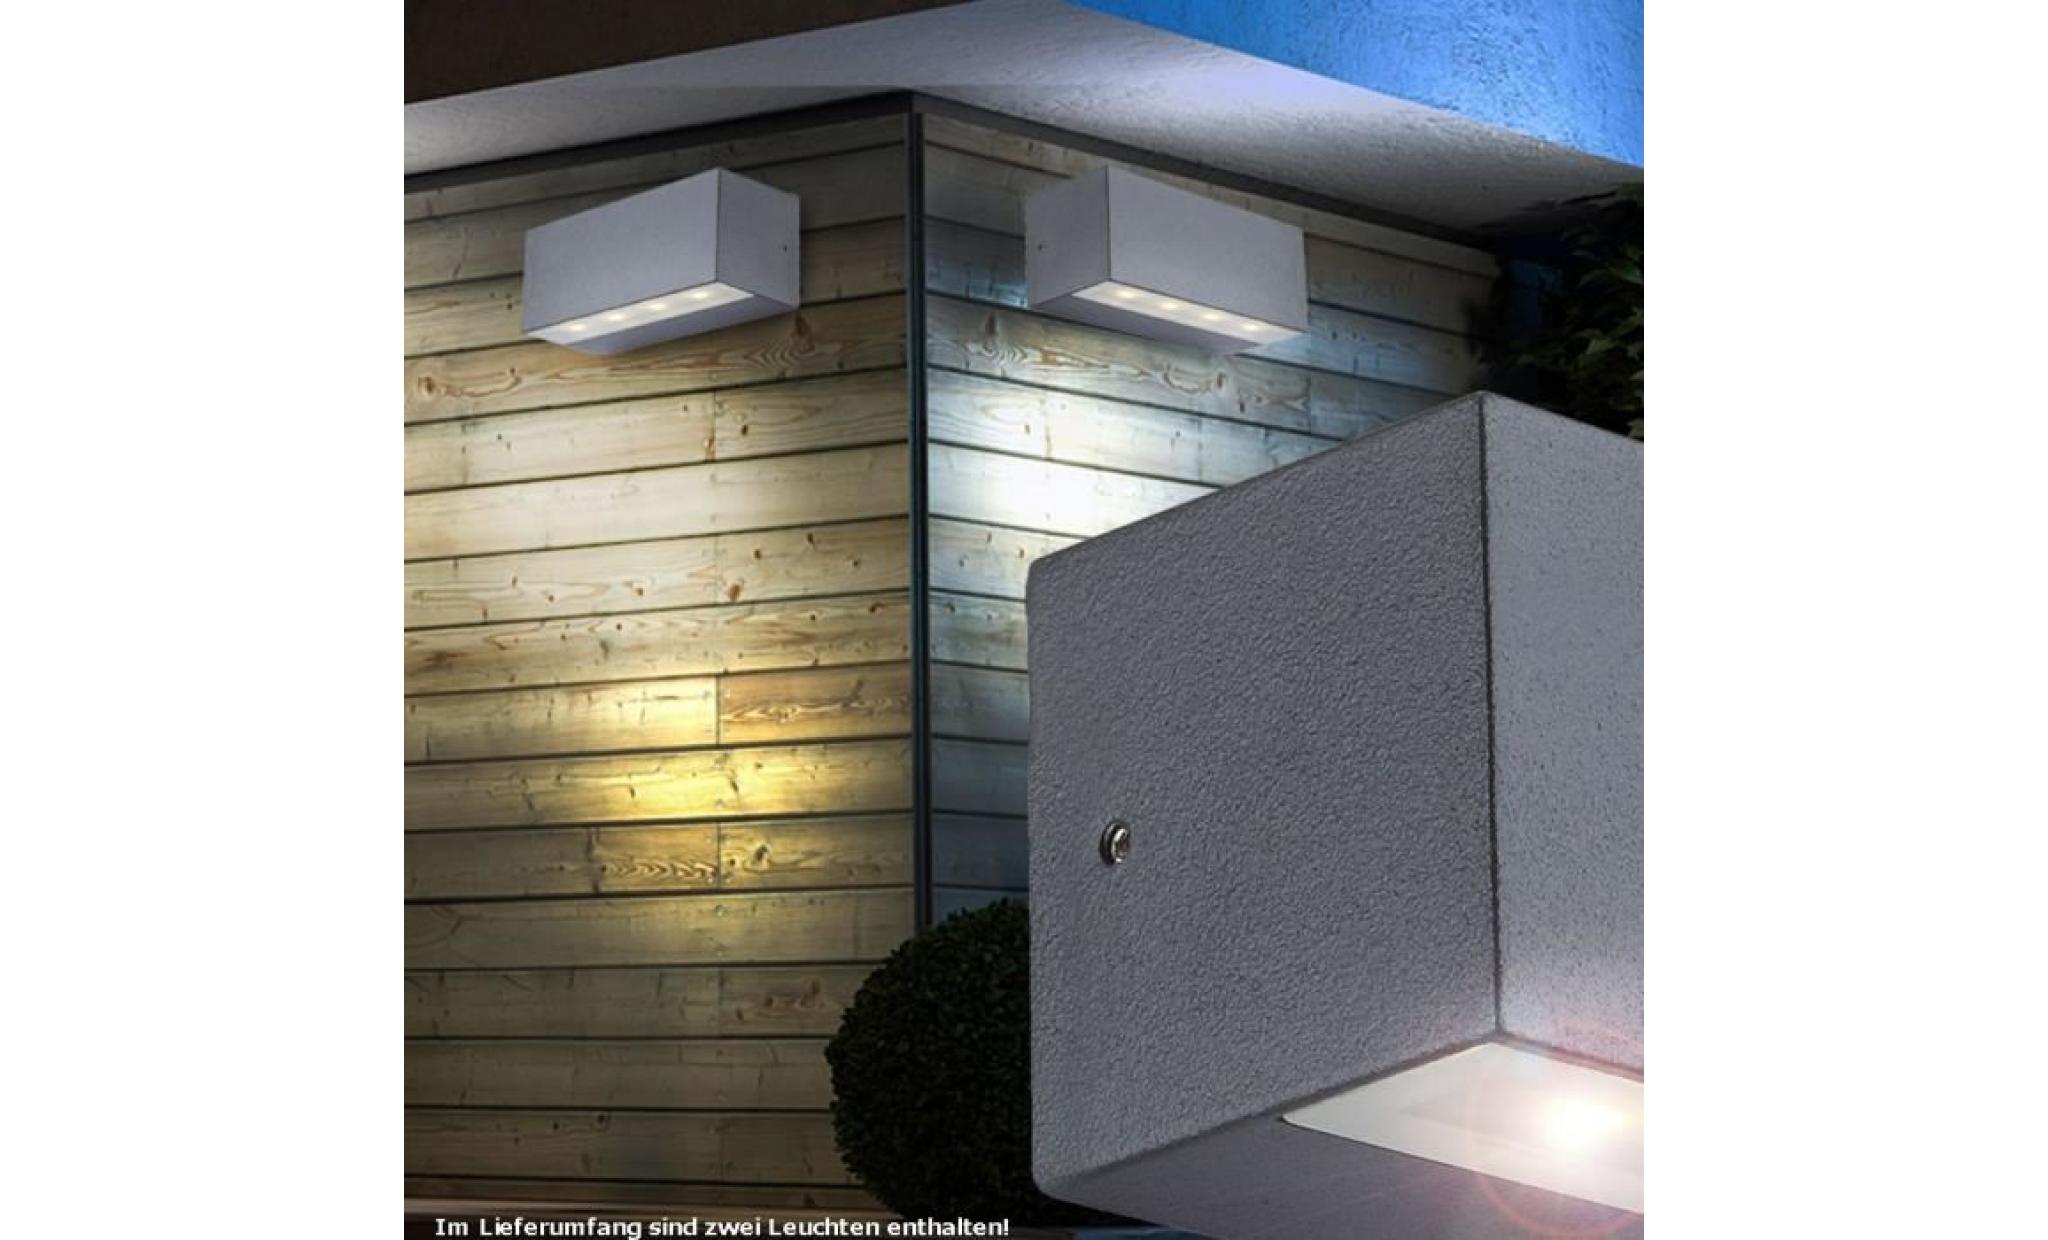 2 x applique 4 watts luminaire mural ip44 terrasse lampe extérieur aluminium globo 34152 pas cher